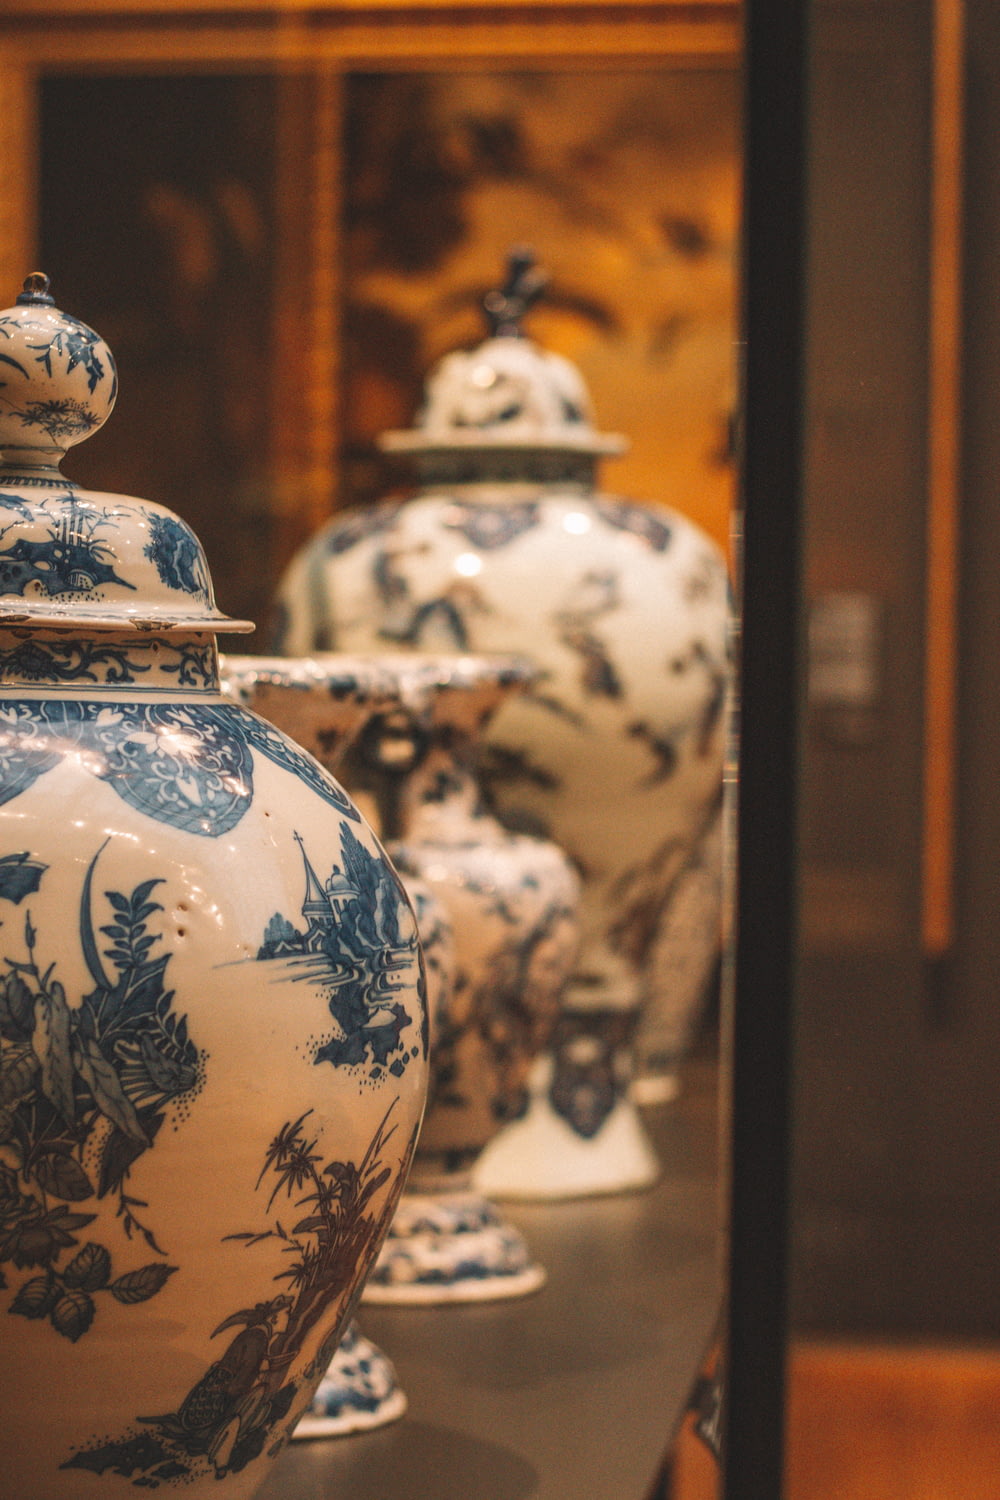 white and blue floral ceramic vase